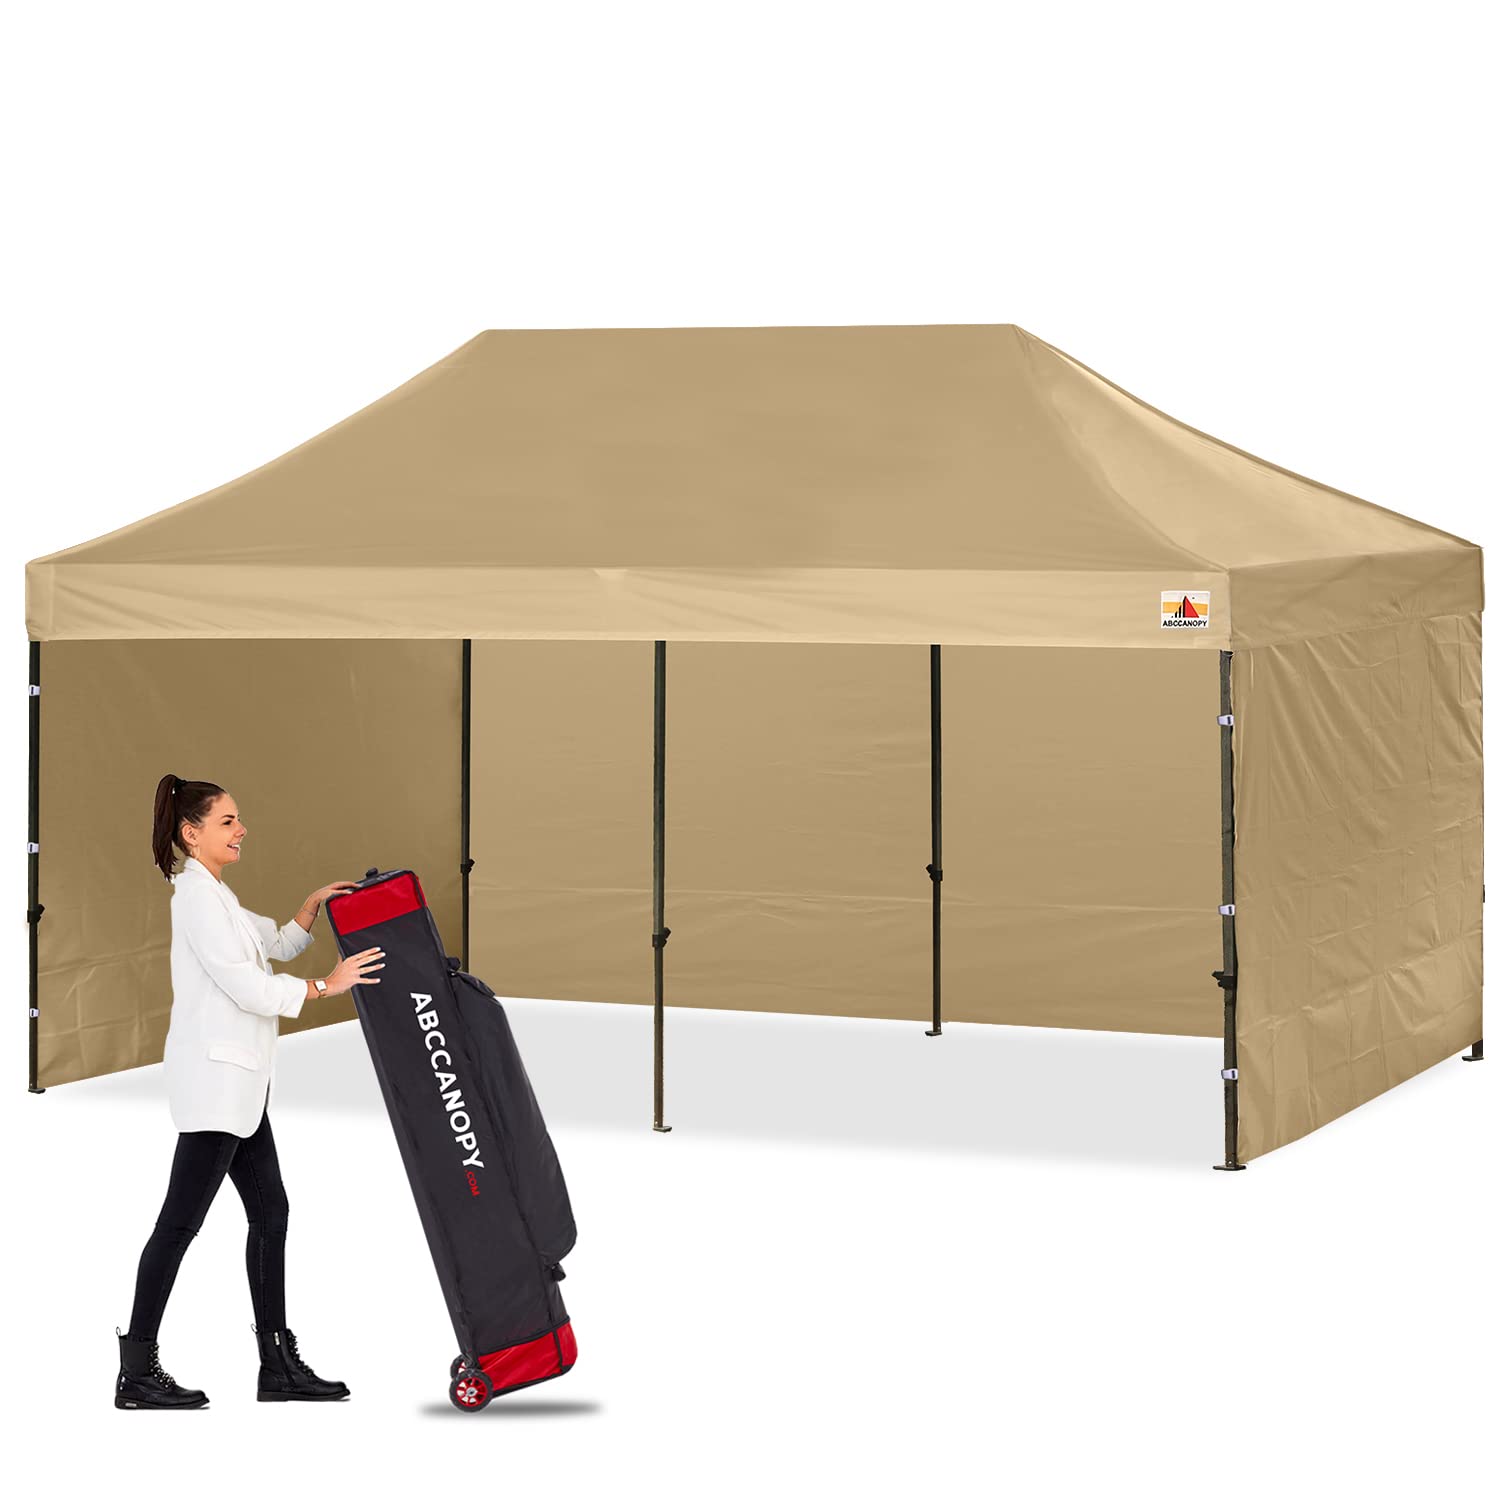 Abccanopy Heavy Duty Ez Pop Up Canopy Tent With Sidewalls 10X20,Beige